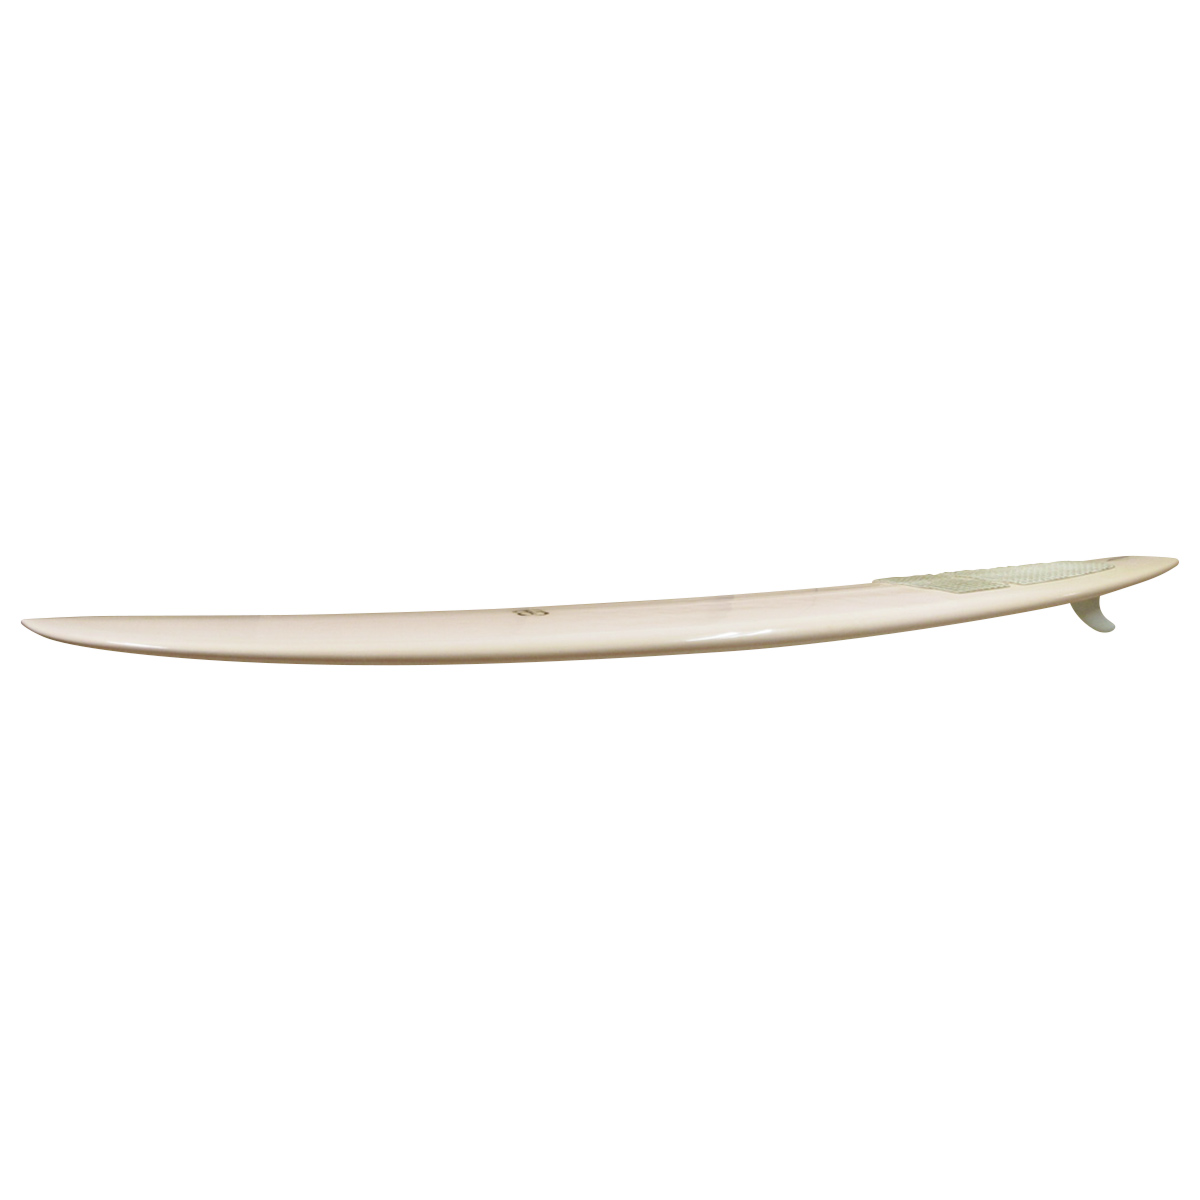 Typhoon Surfboards / 9`2 TAKUJI Model Shaped By Chris Christenson